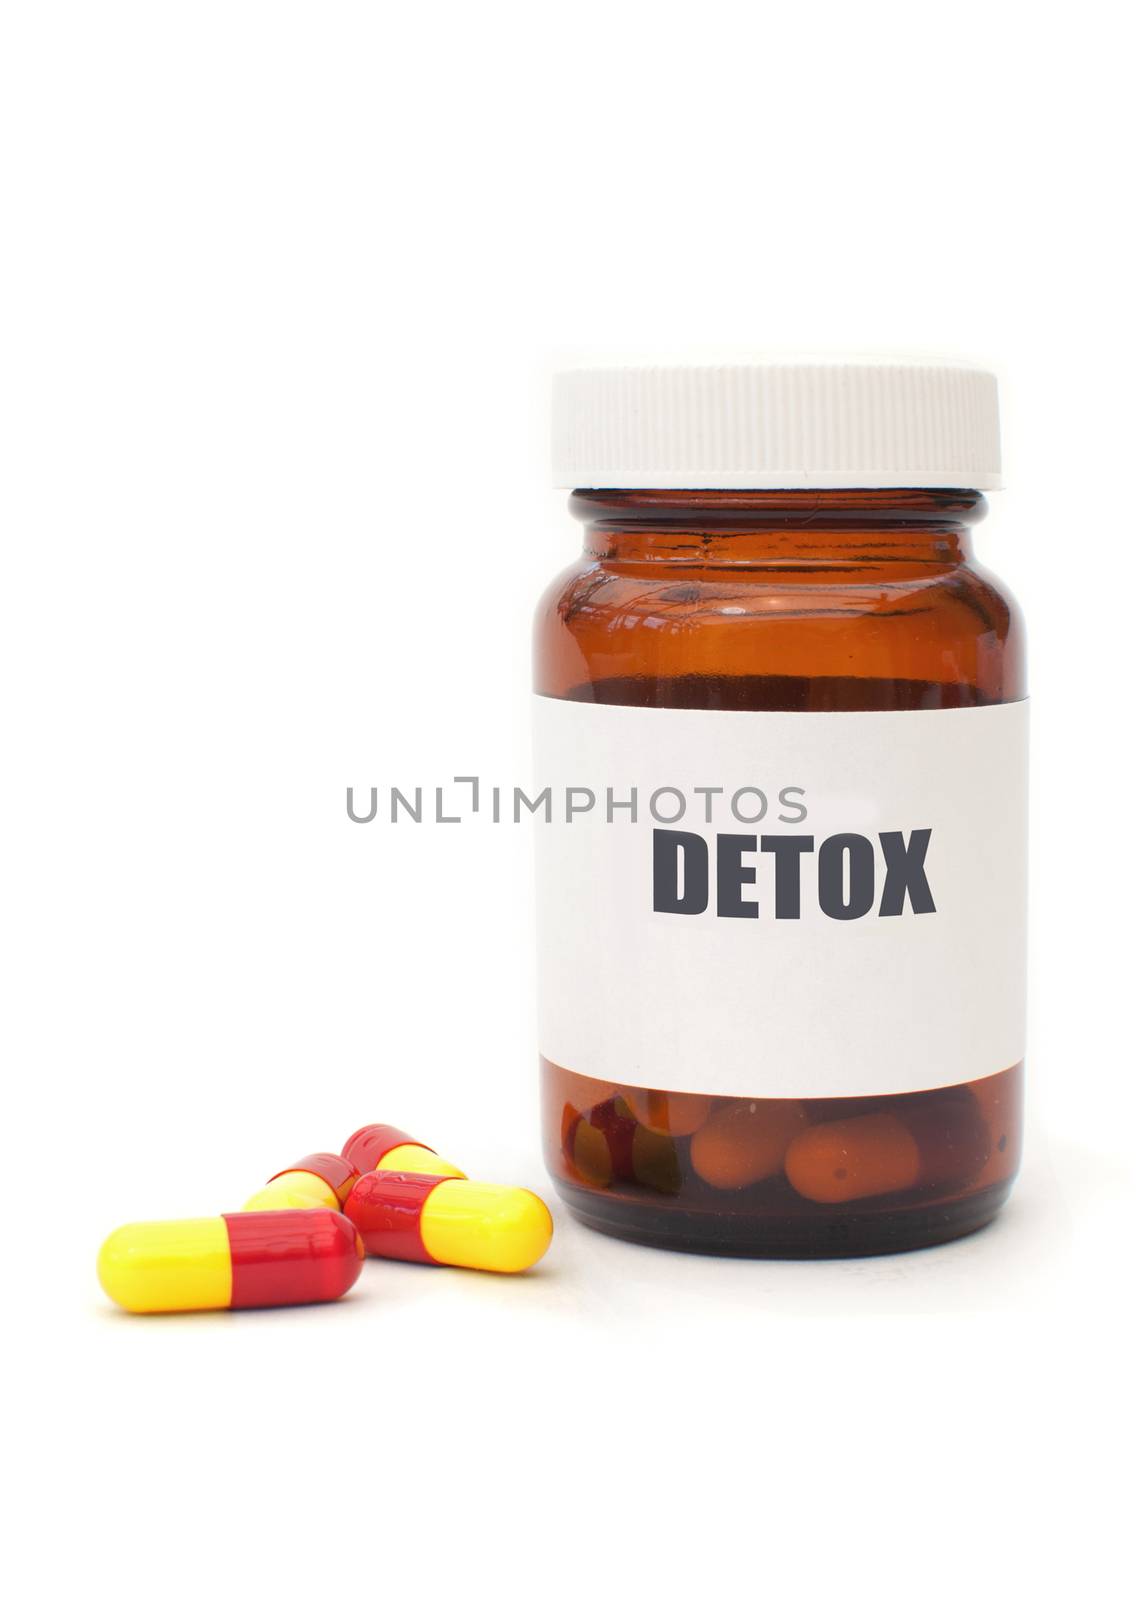 Detox pills  by unikpix